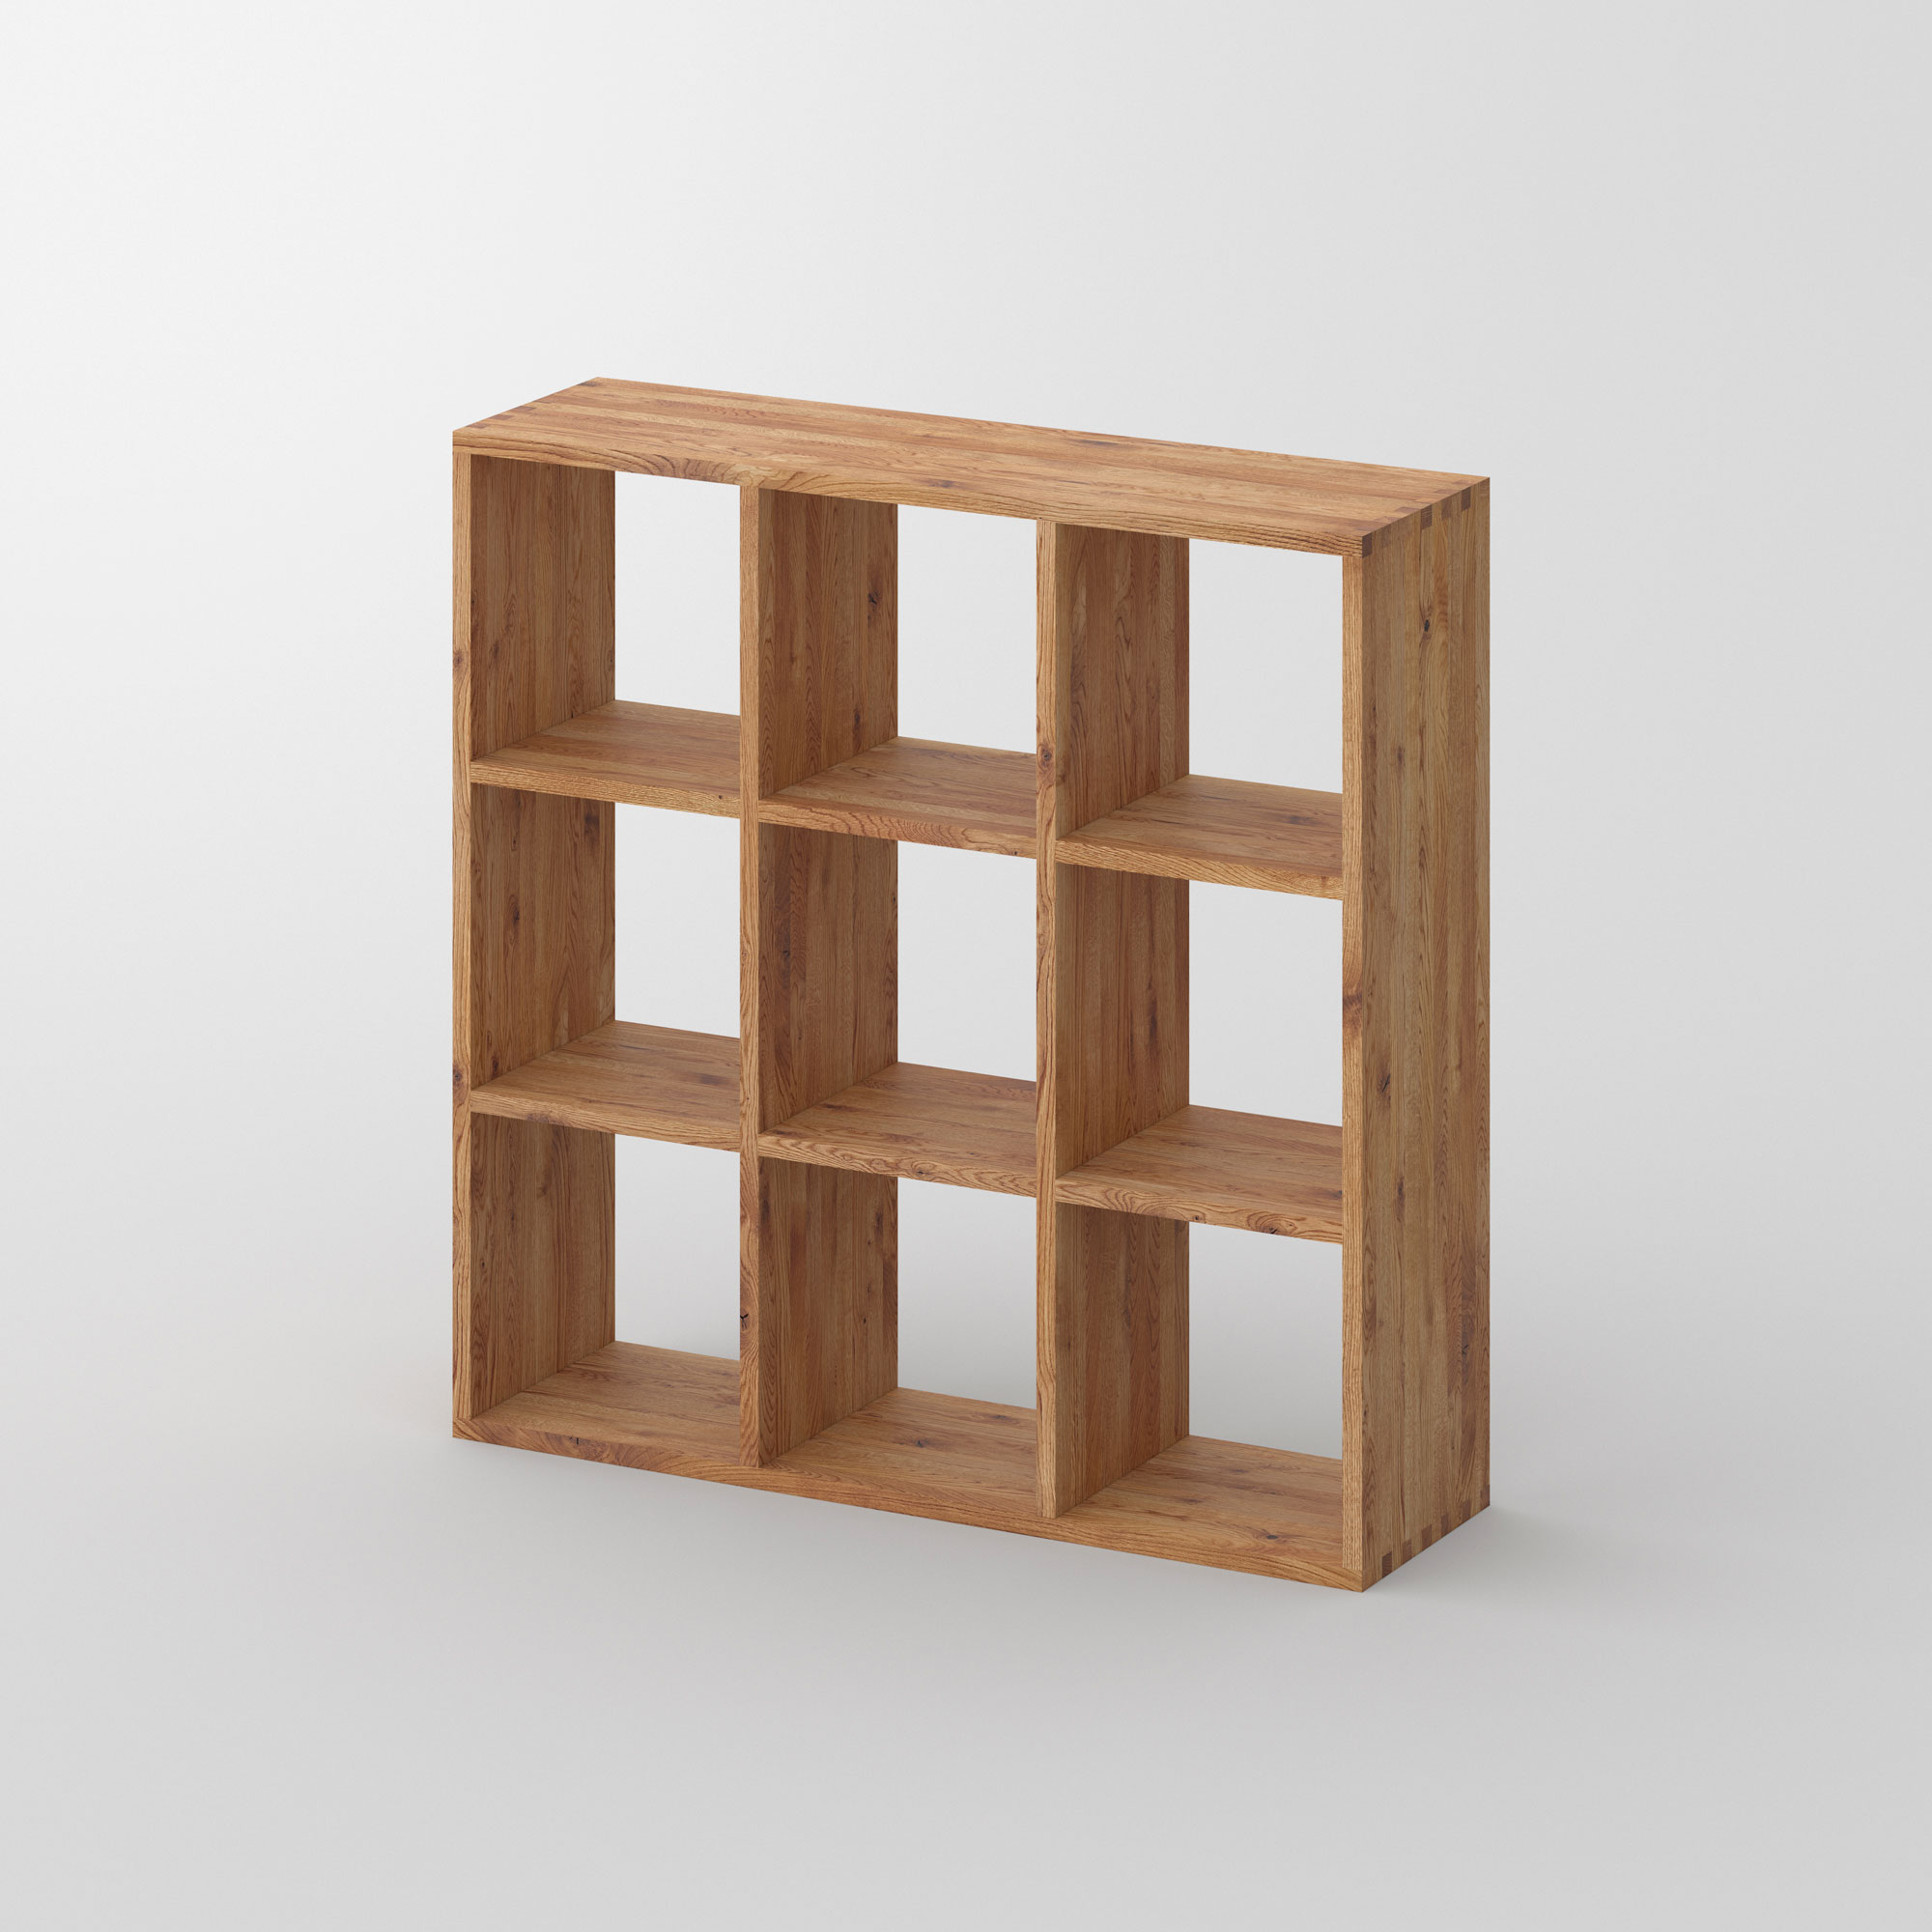 Designer Wood Shelf PISA G cam1 custom made in solid wood by vitamin design